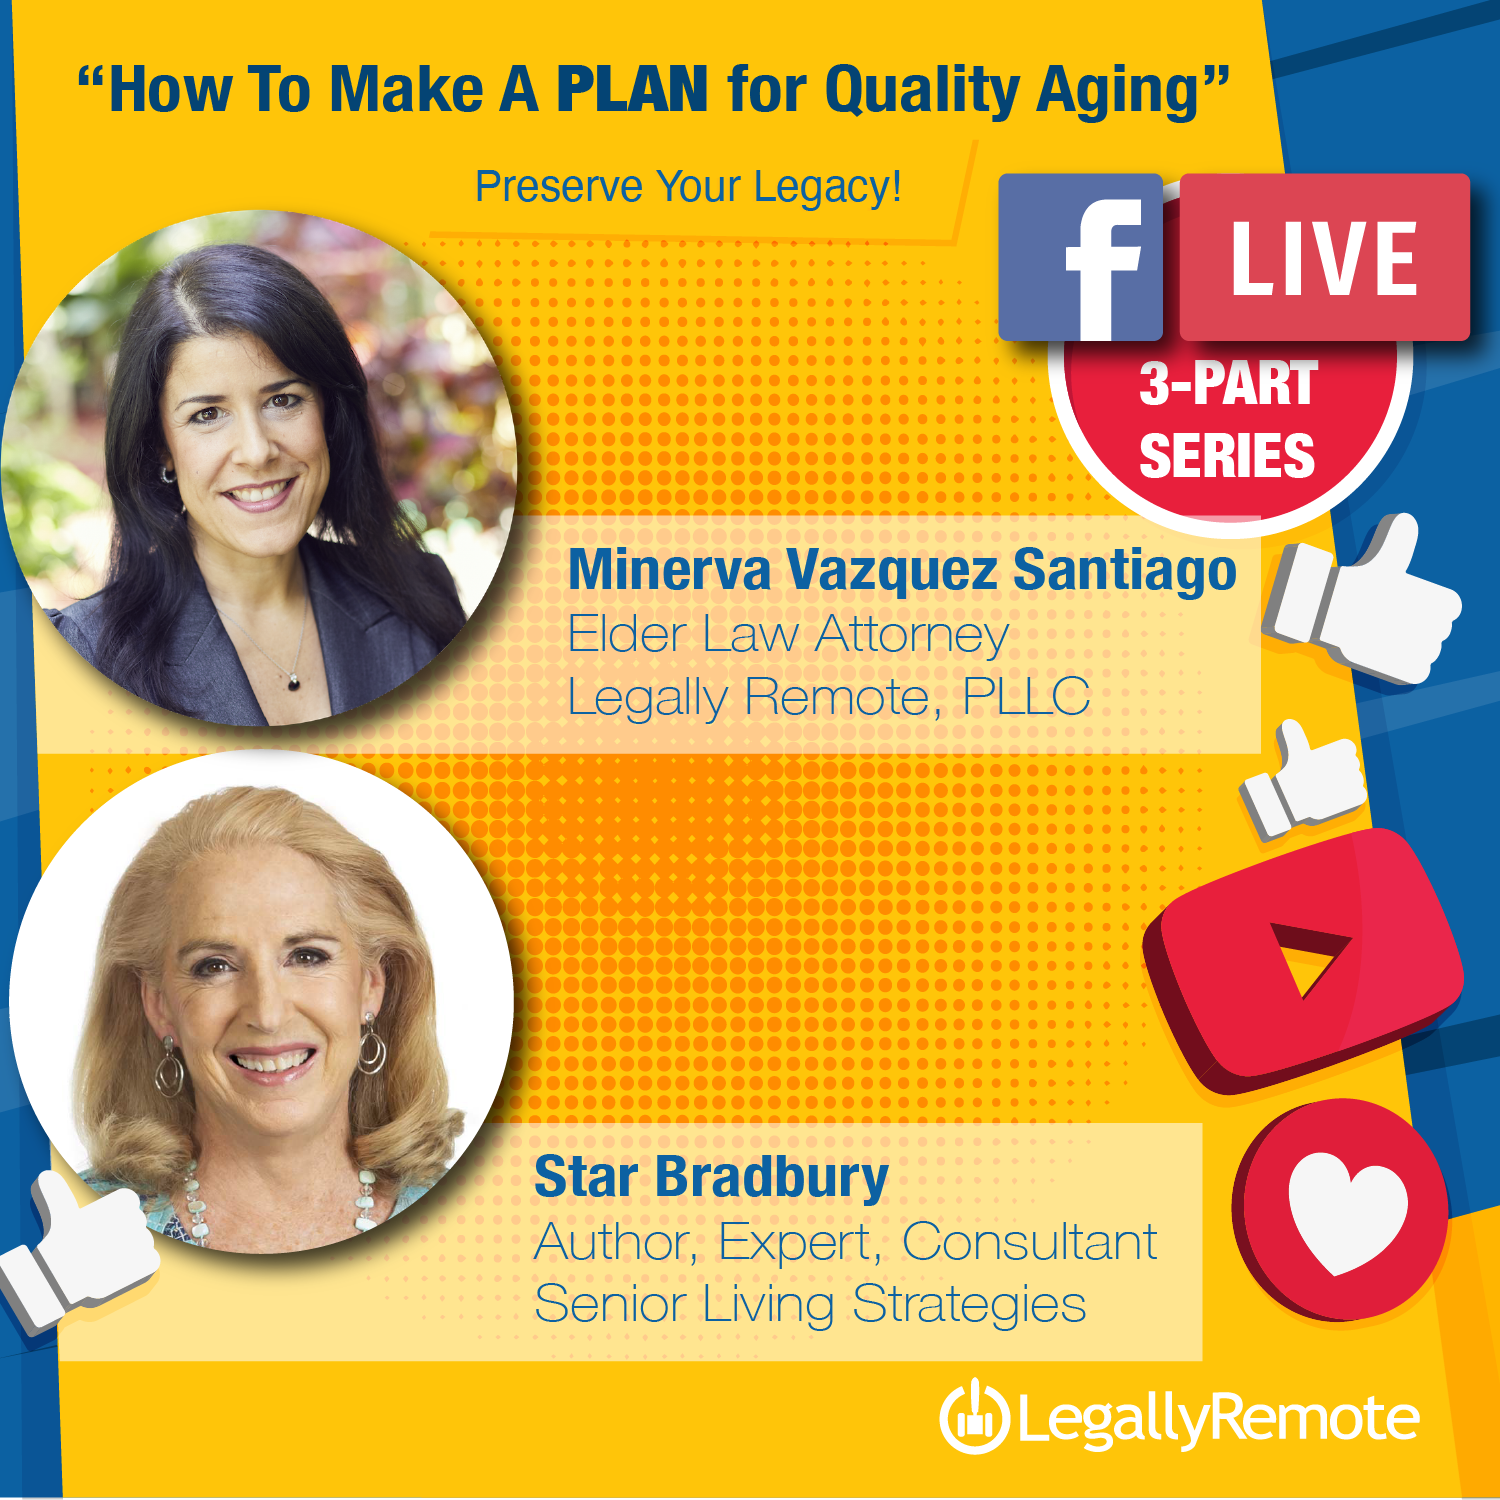 Elder Law Attorney, Minerva Vazquez Santiago, Esq. & Expert on Senior Living Strategies, Star Bradbury, Join for a 3-Part Podcast Series on "Quality Aging"